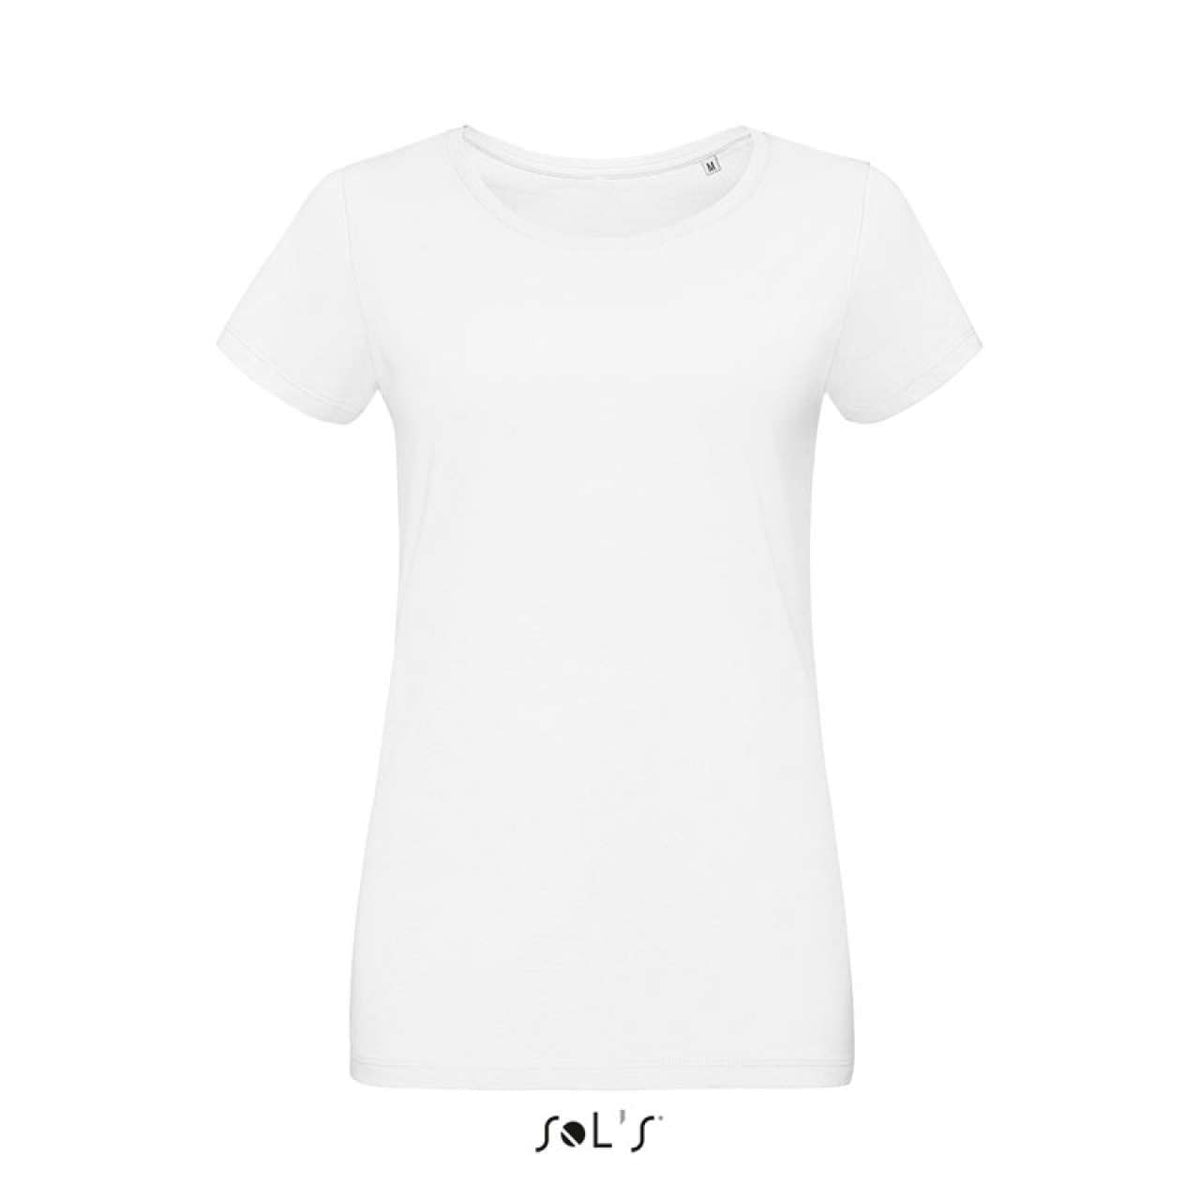 SOL'S Damen T-Shirt Classic Woman Lady Fit Baumwolle Shirt Oberteil